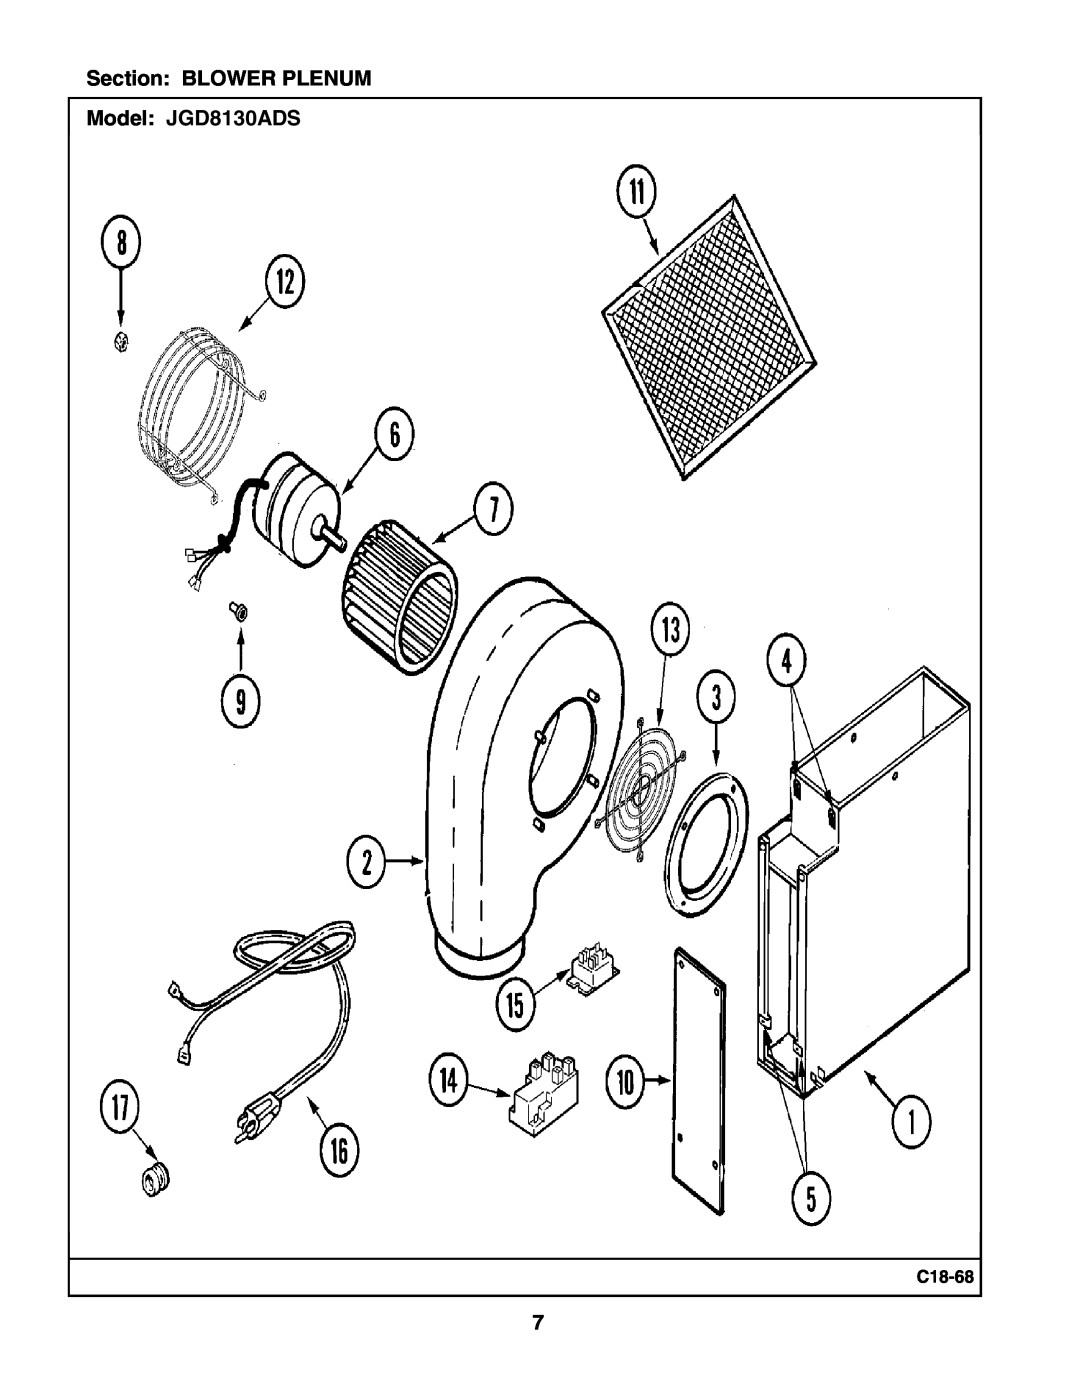 Maytag manual Section BLOWER PLENUM Model JGD8130ADS, C18-68 